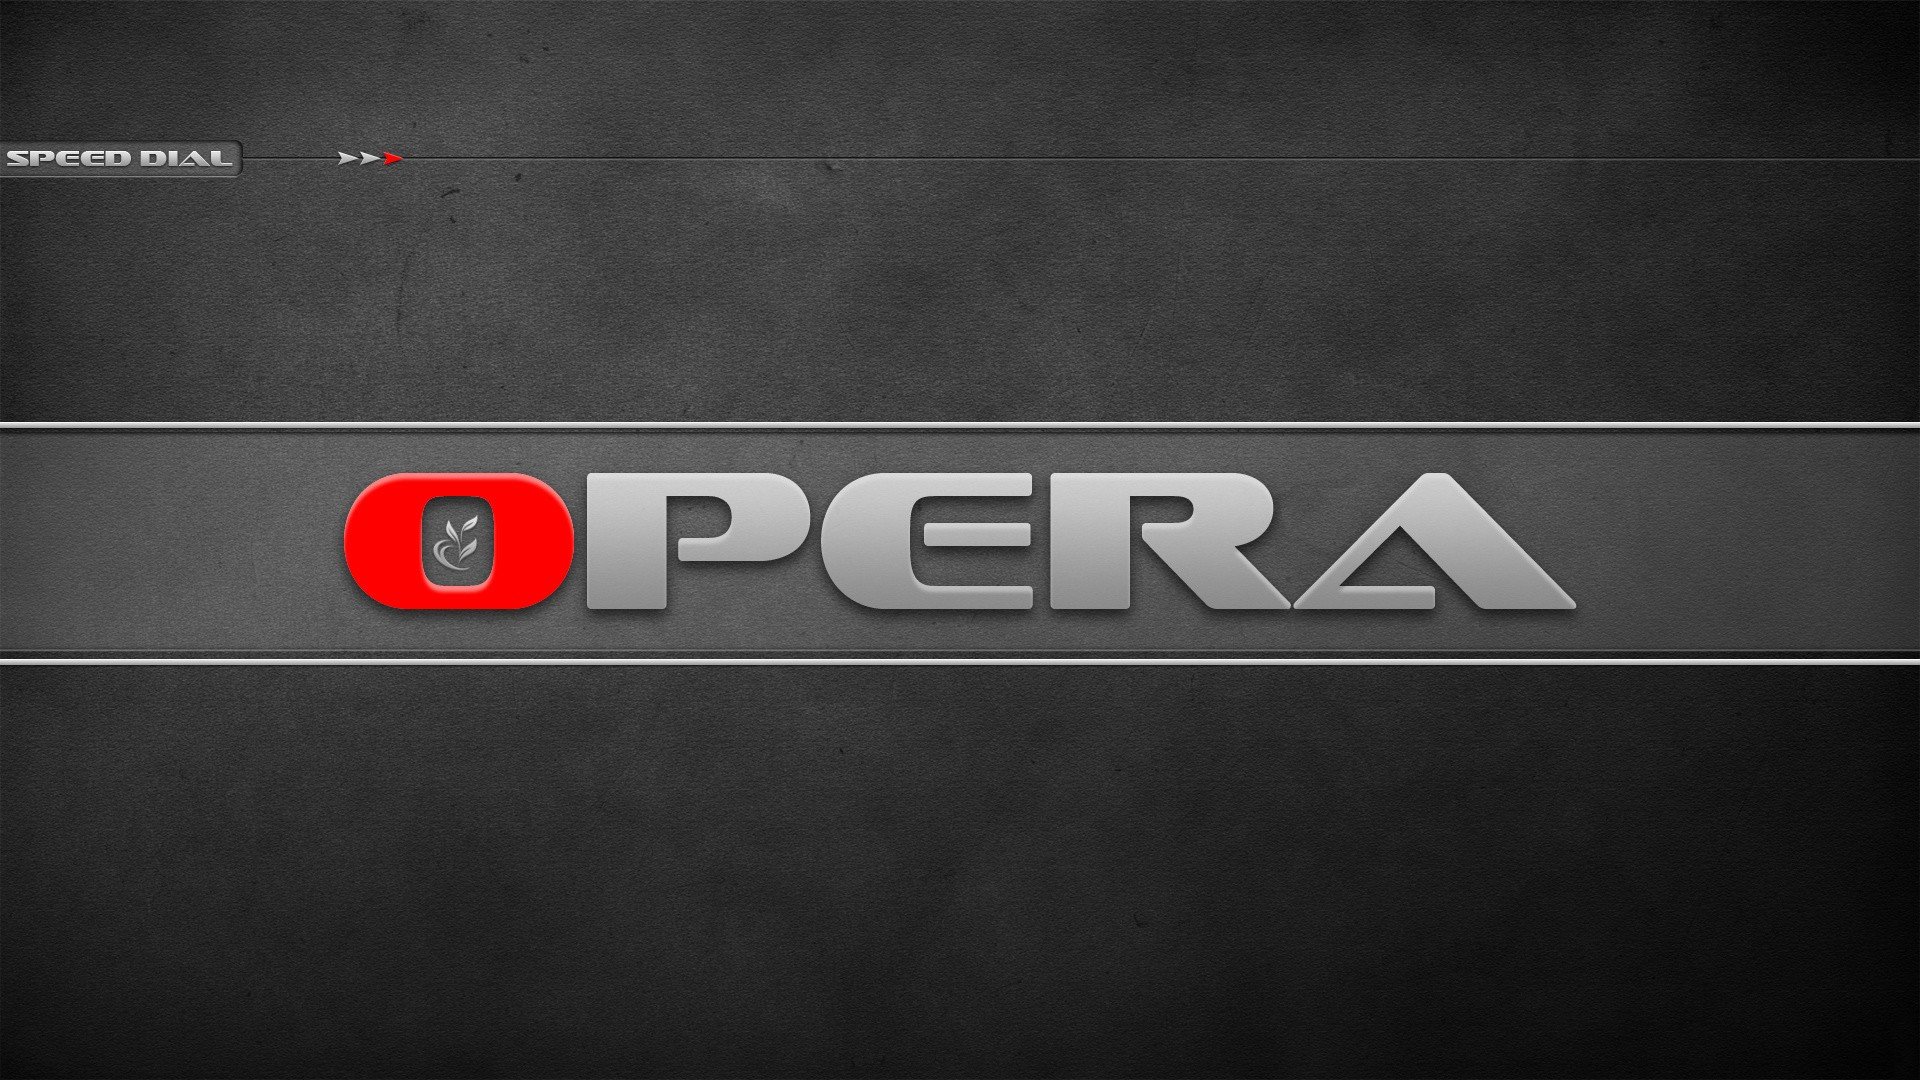 opera, Opera browser Wallpaper